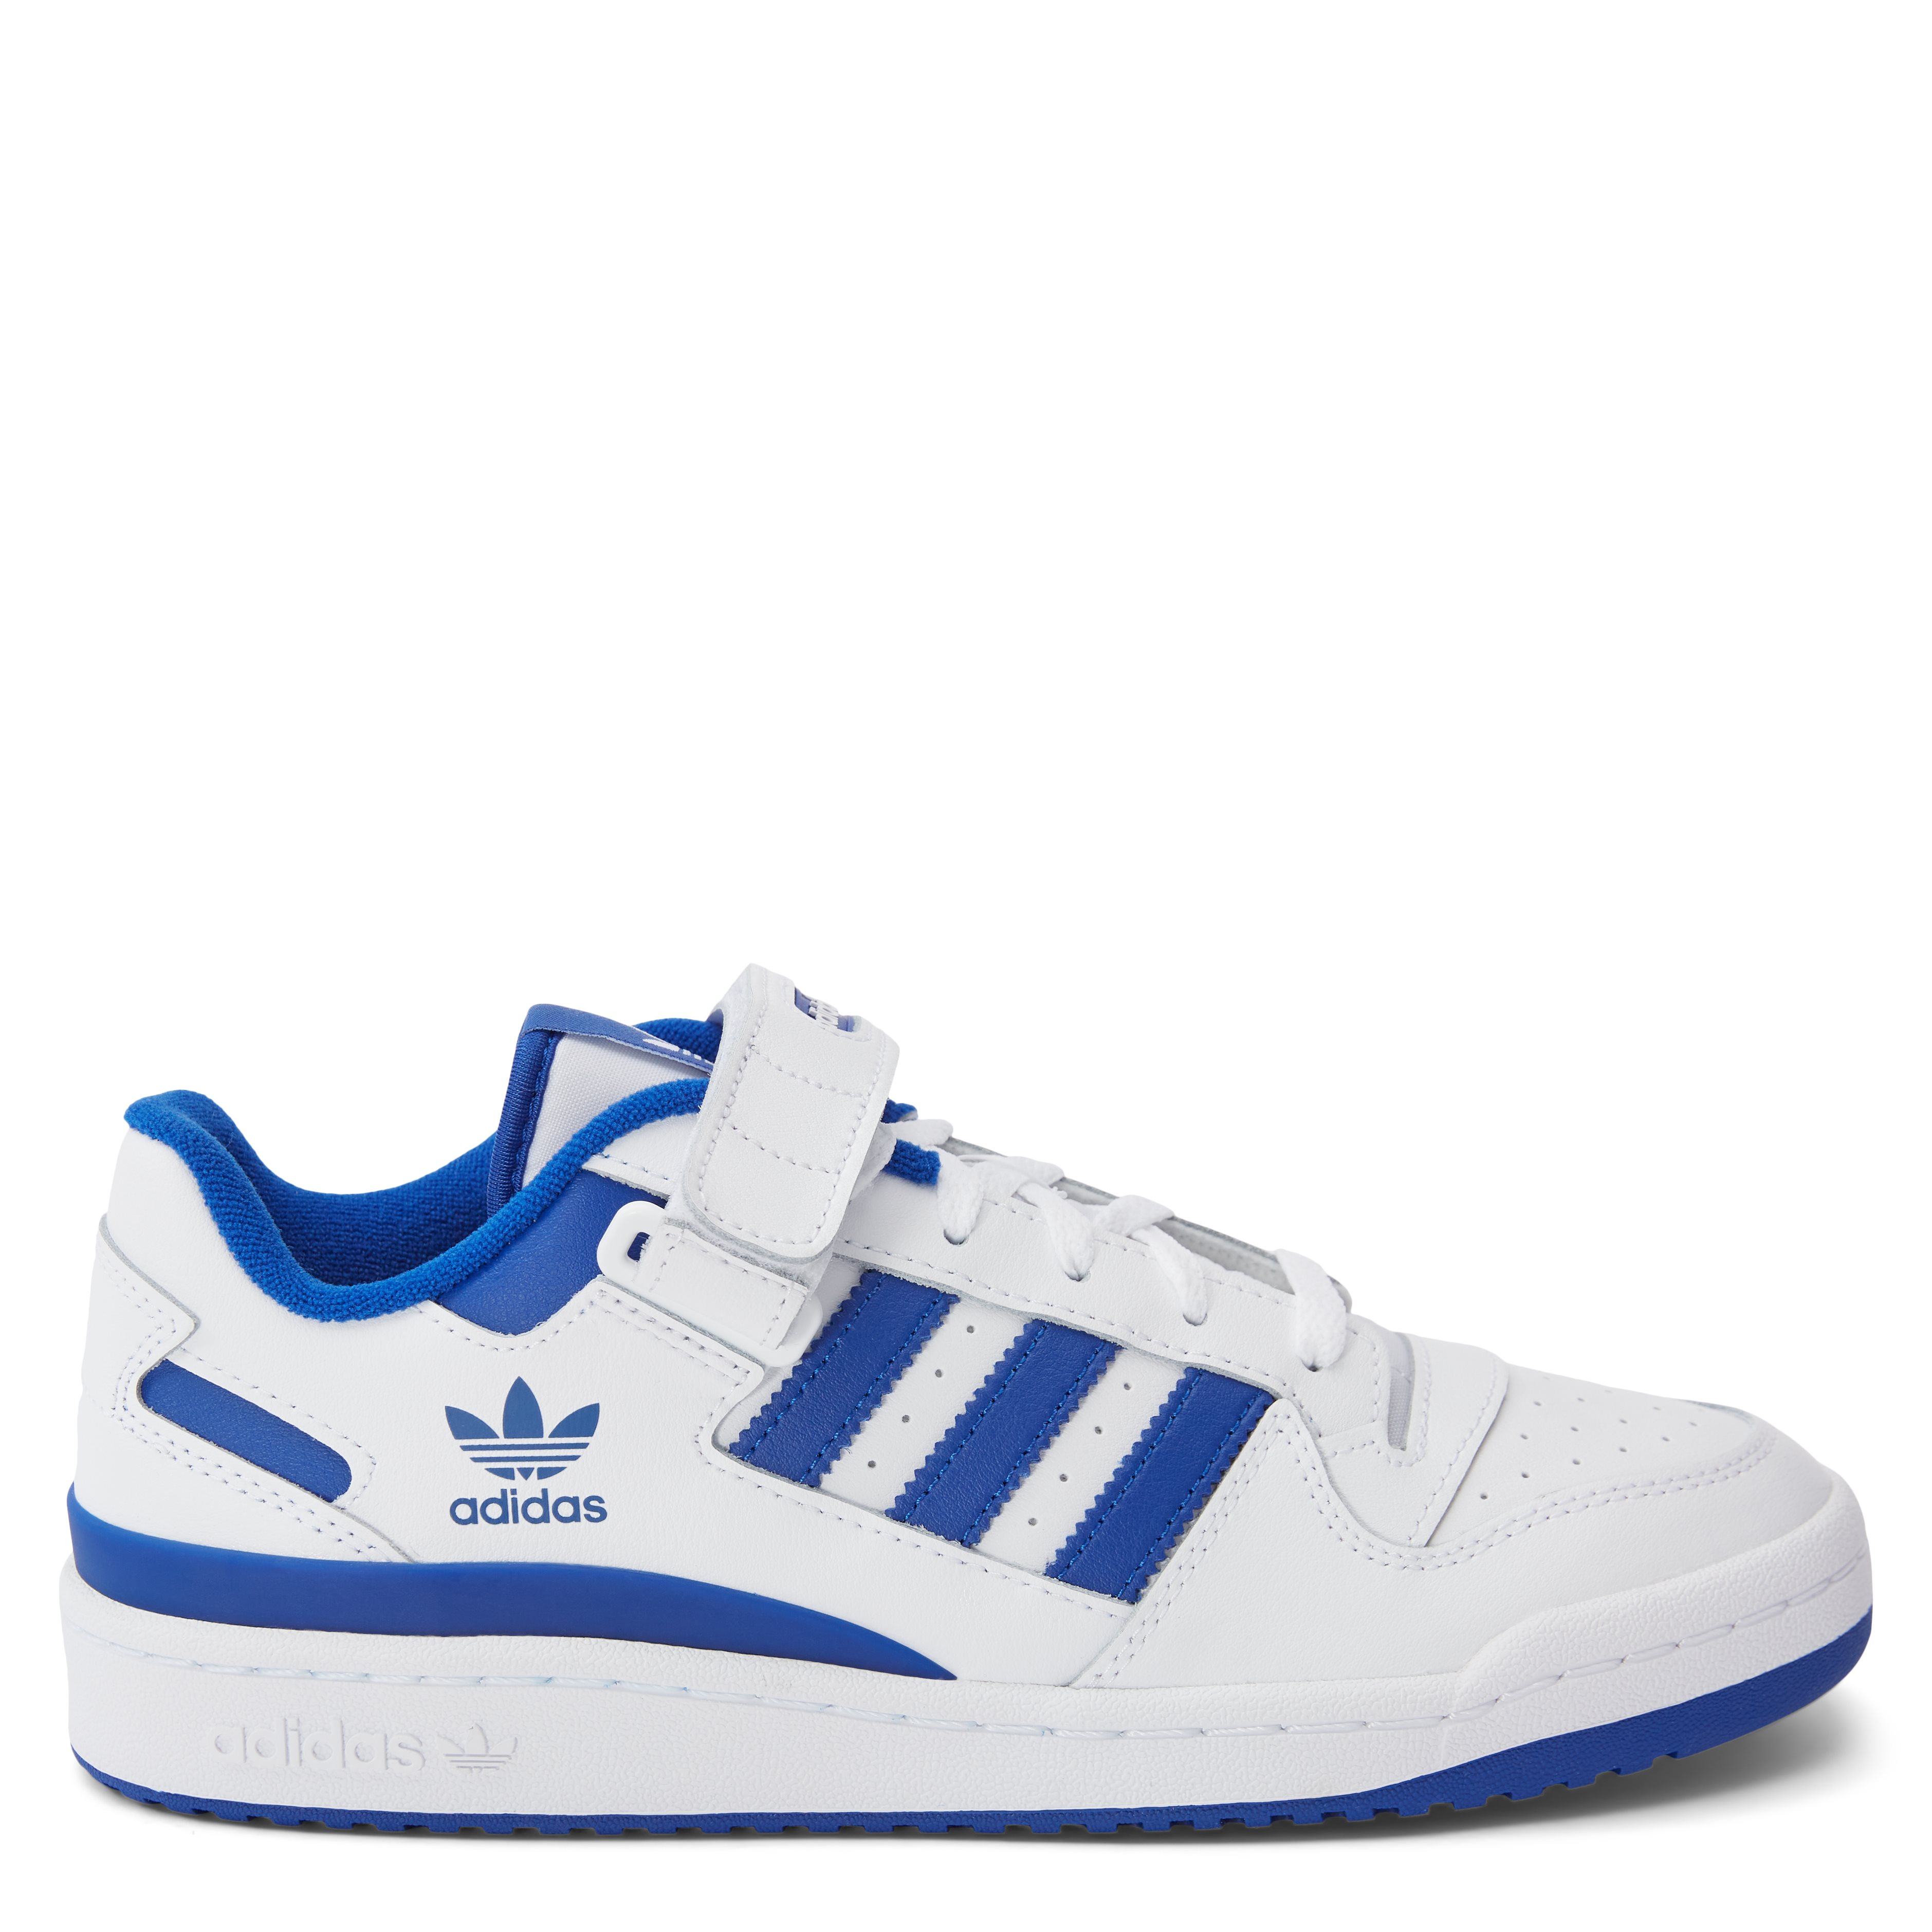 Adidas Originals Shoes FORUM LOW FY7756 Blue